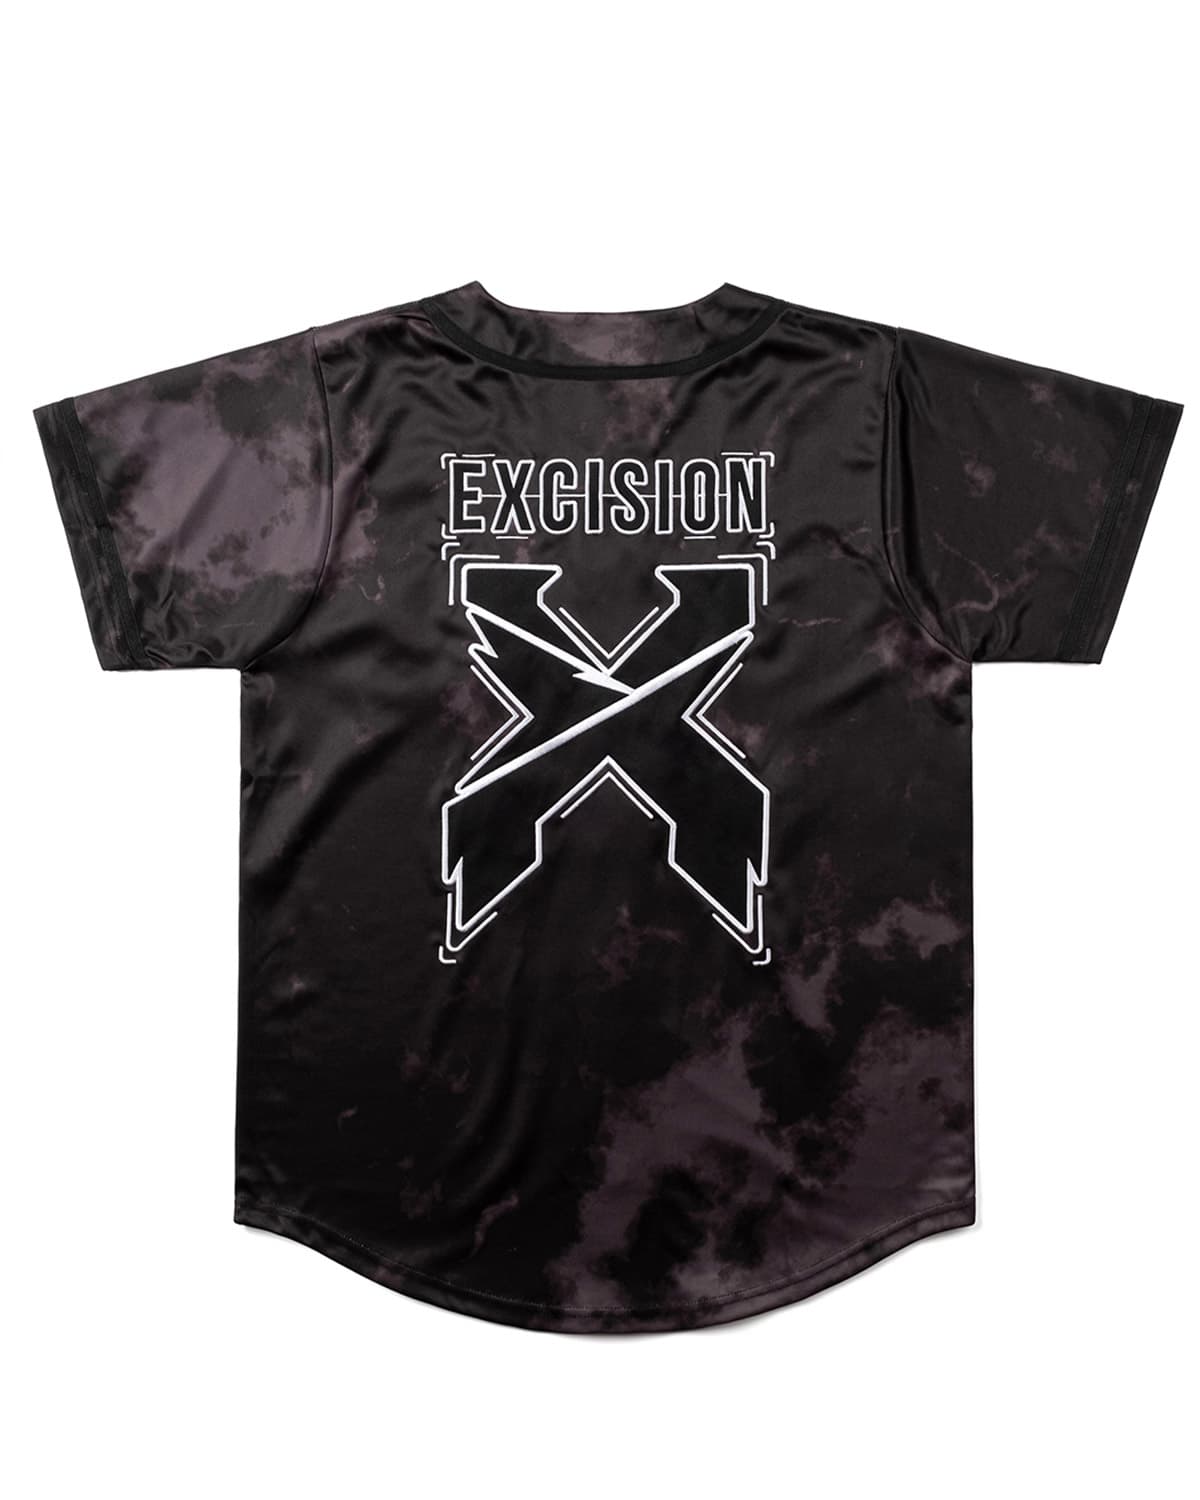 Headbanger Tie Dye Baseball Jersey (Black)